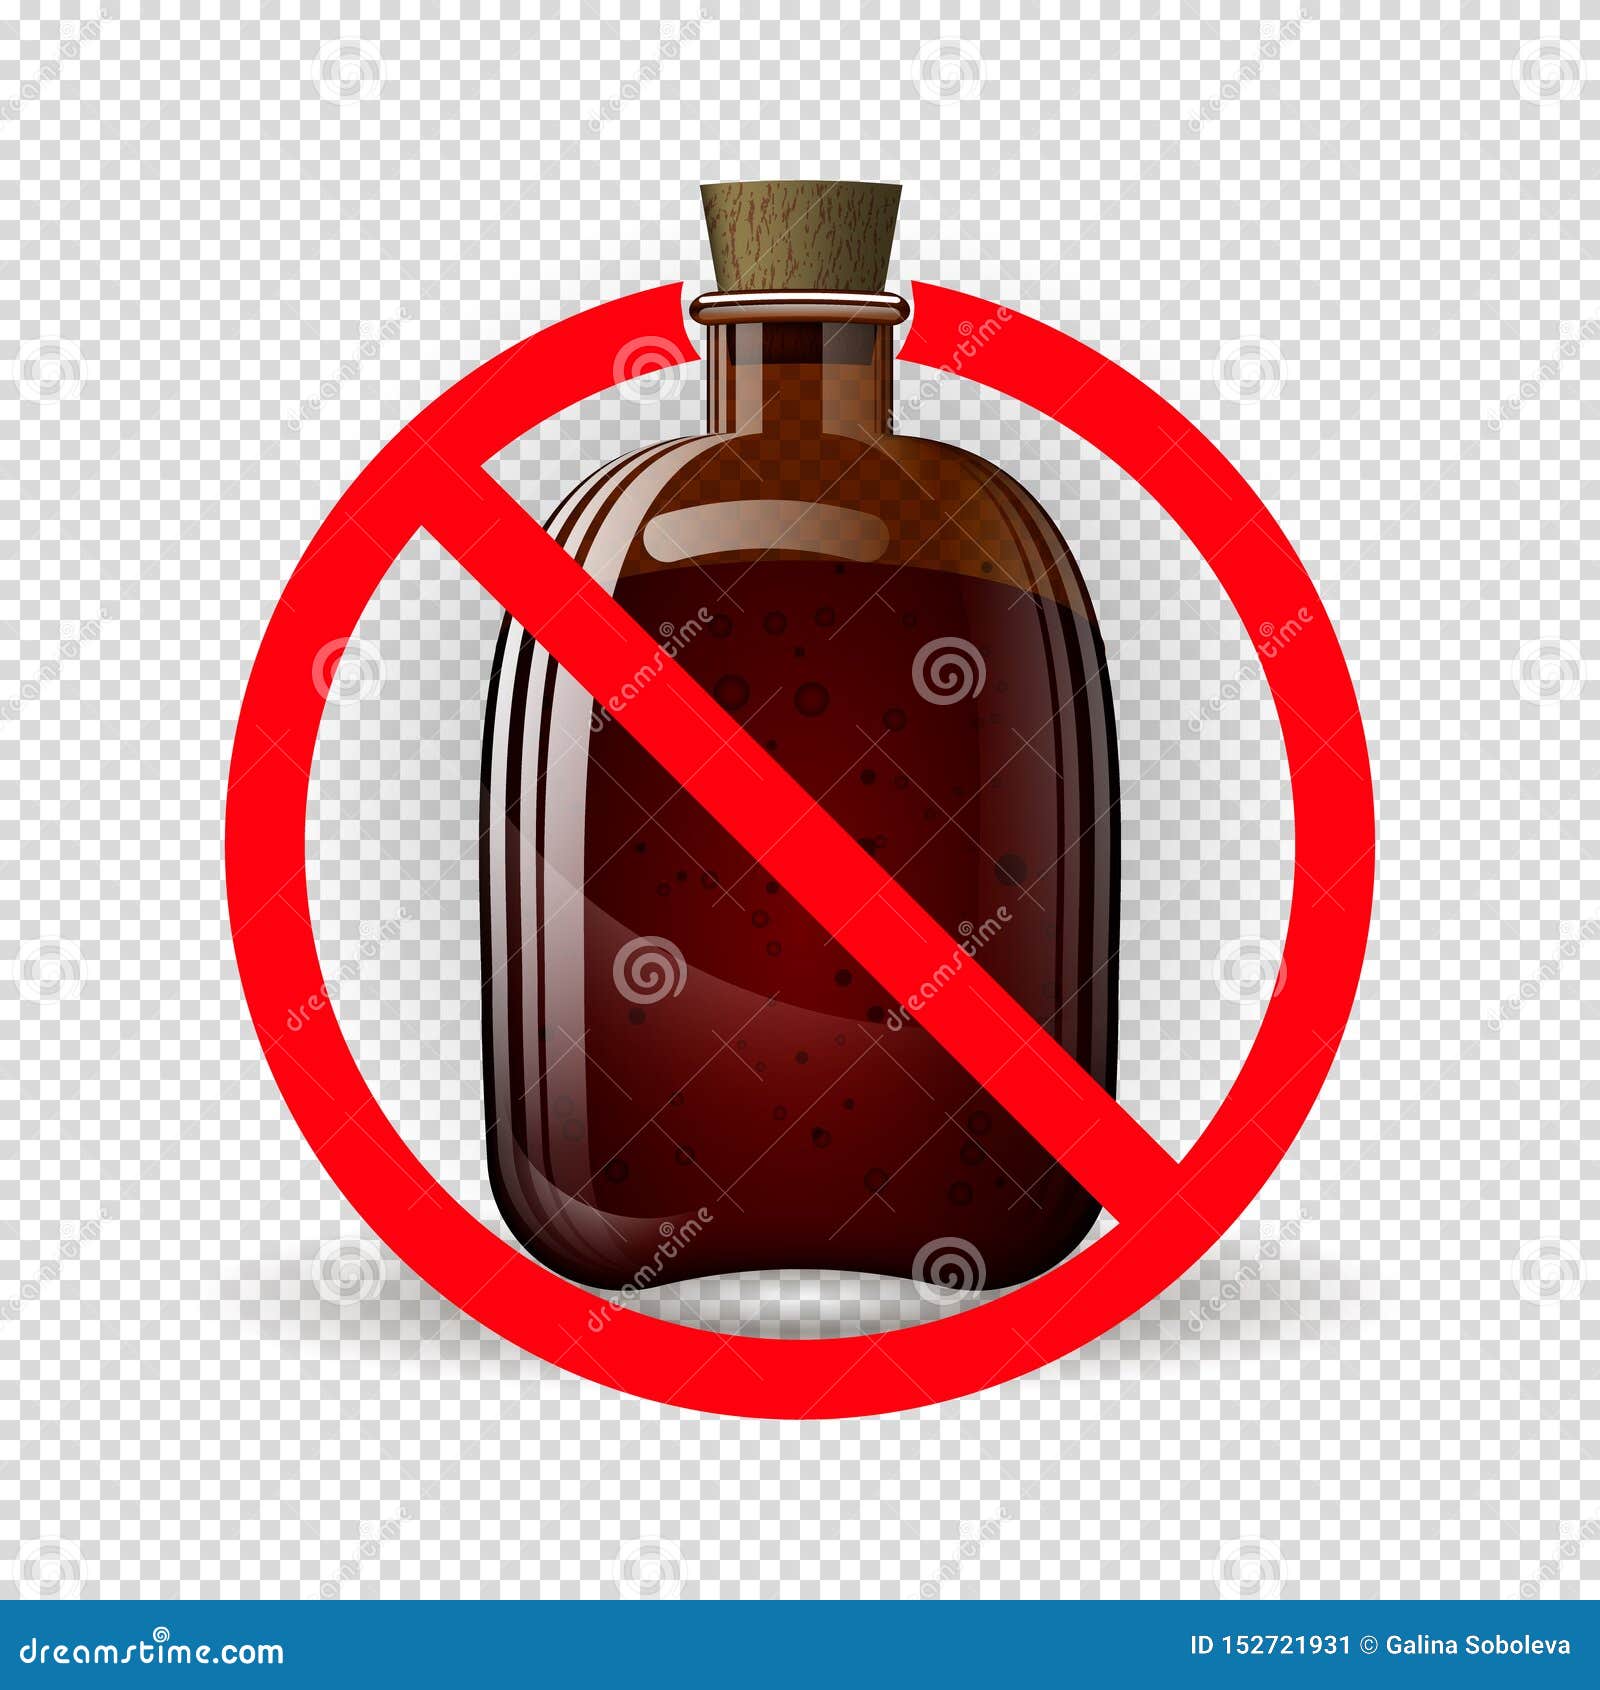 Стоп бан песни. Знак антиалкоголь. Бутылка анти алкоголь. Знак бутылка под запретом. Знак алкоголь запрещен.